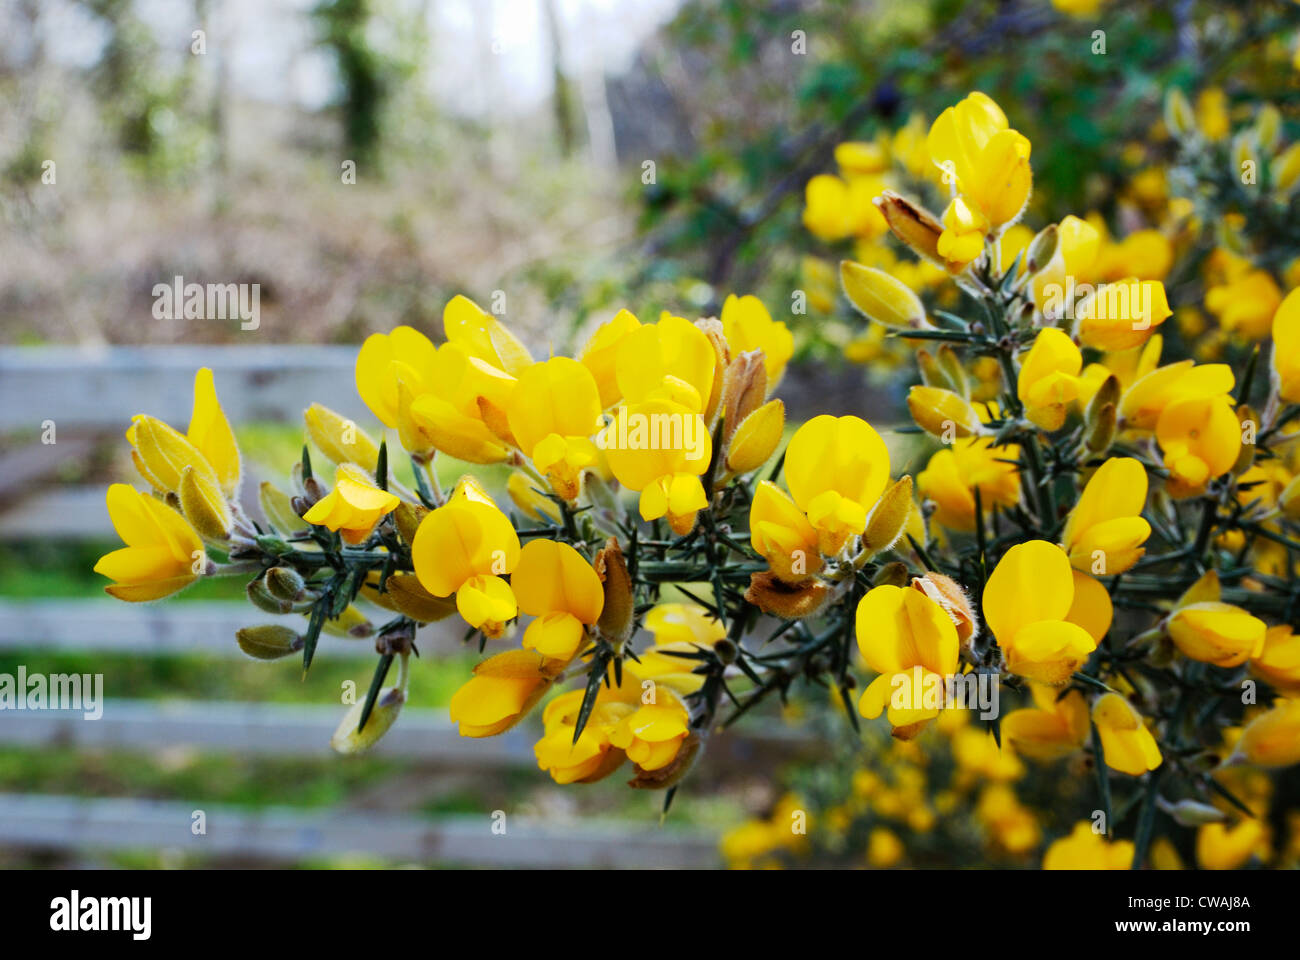 European Gorse. Ulex europea on flower, Wales, UK. Stock Photo